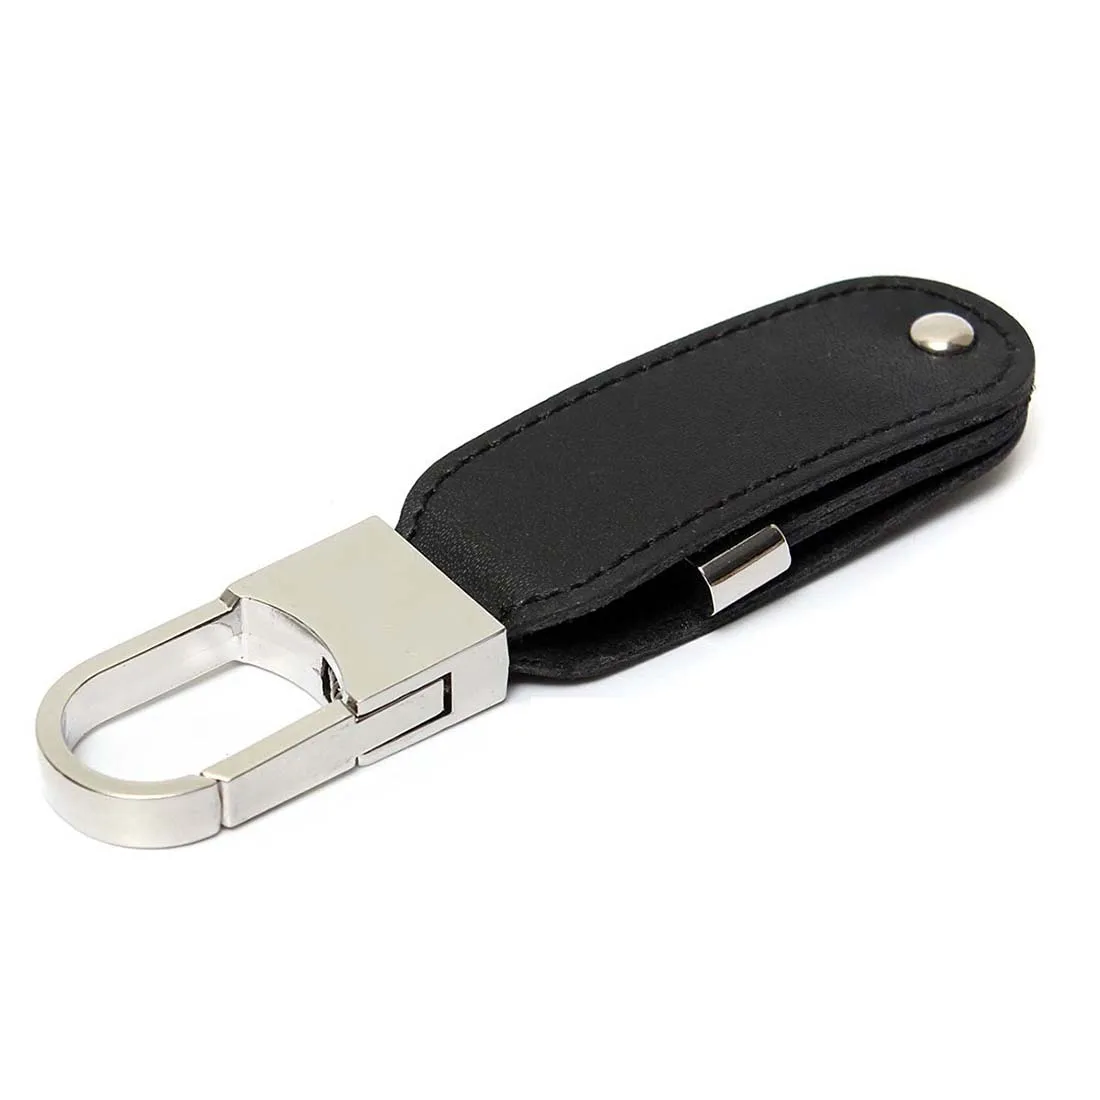 16GB USB ключ 2,0 флеш-накопитель U диск складной кожаный Win 7/8 PC